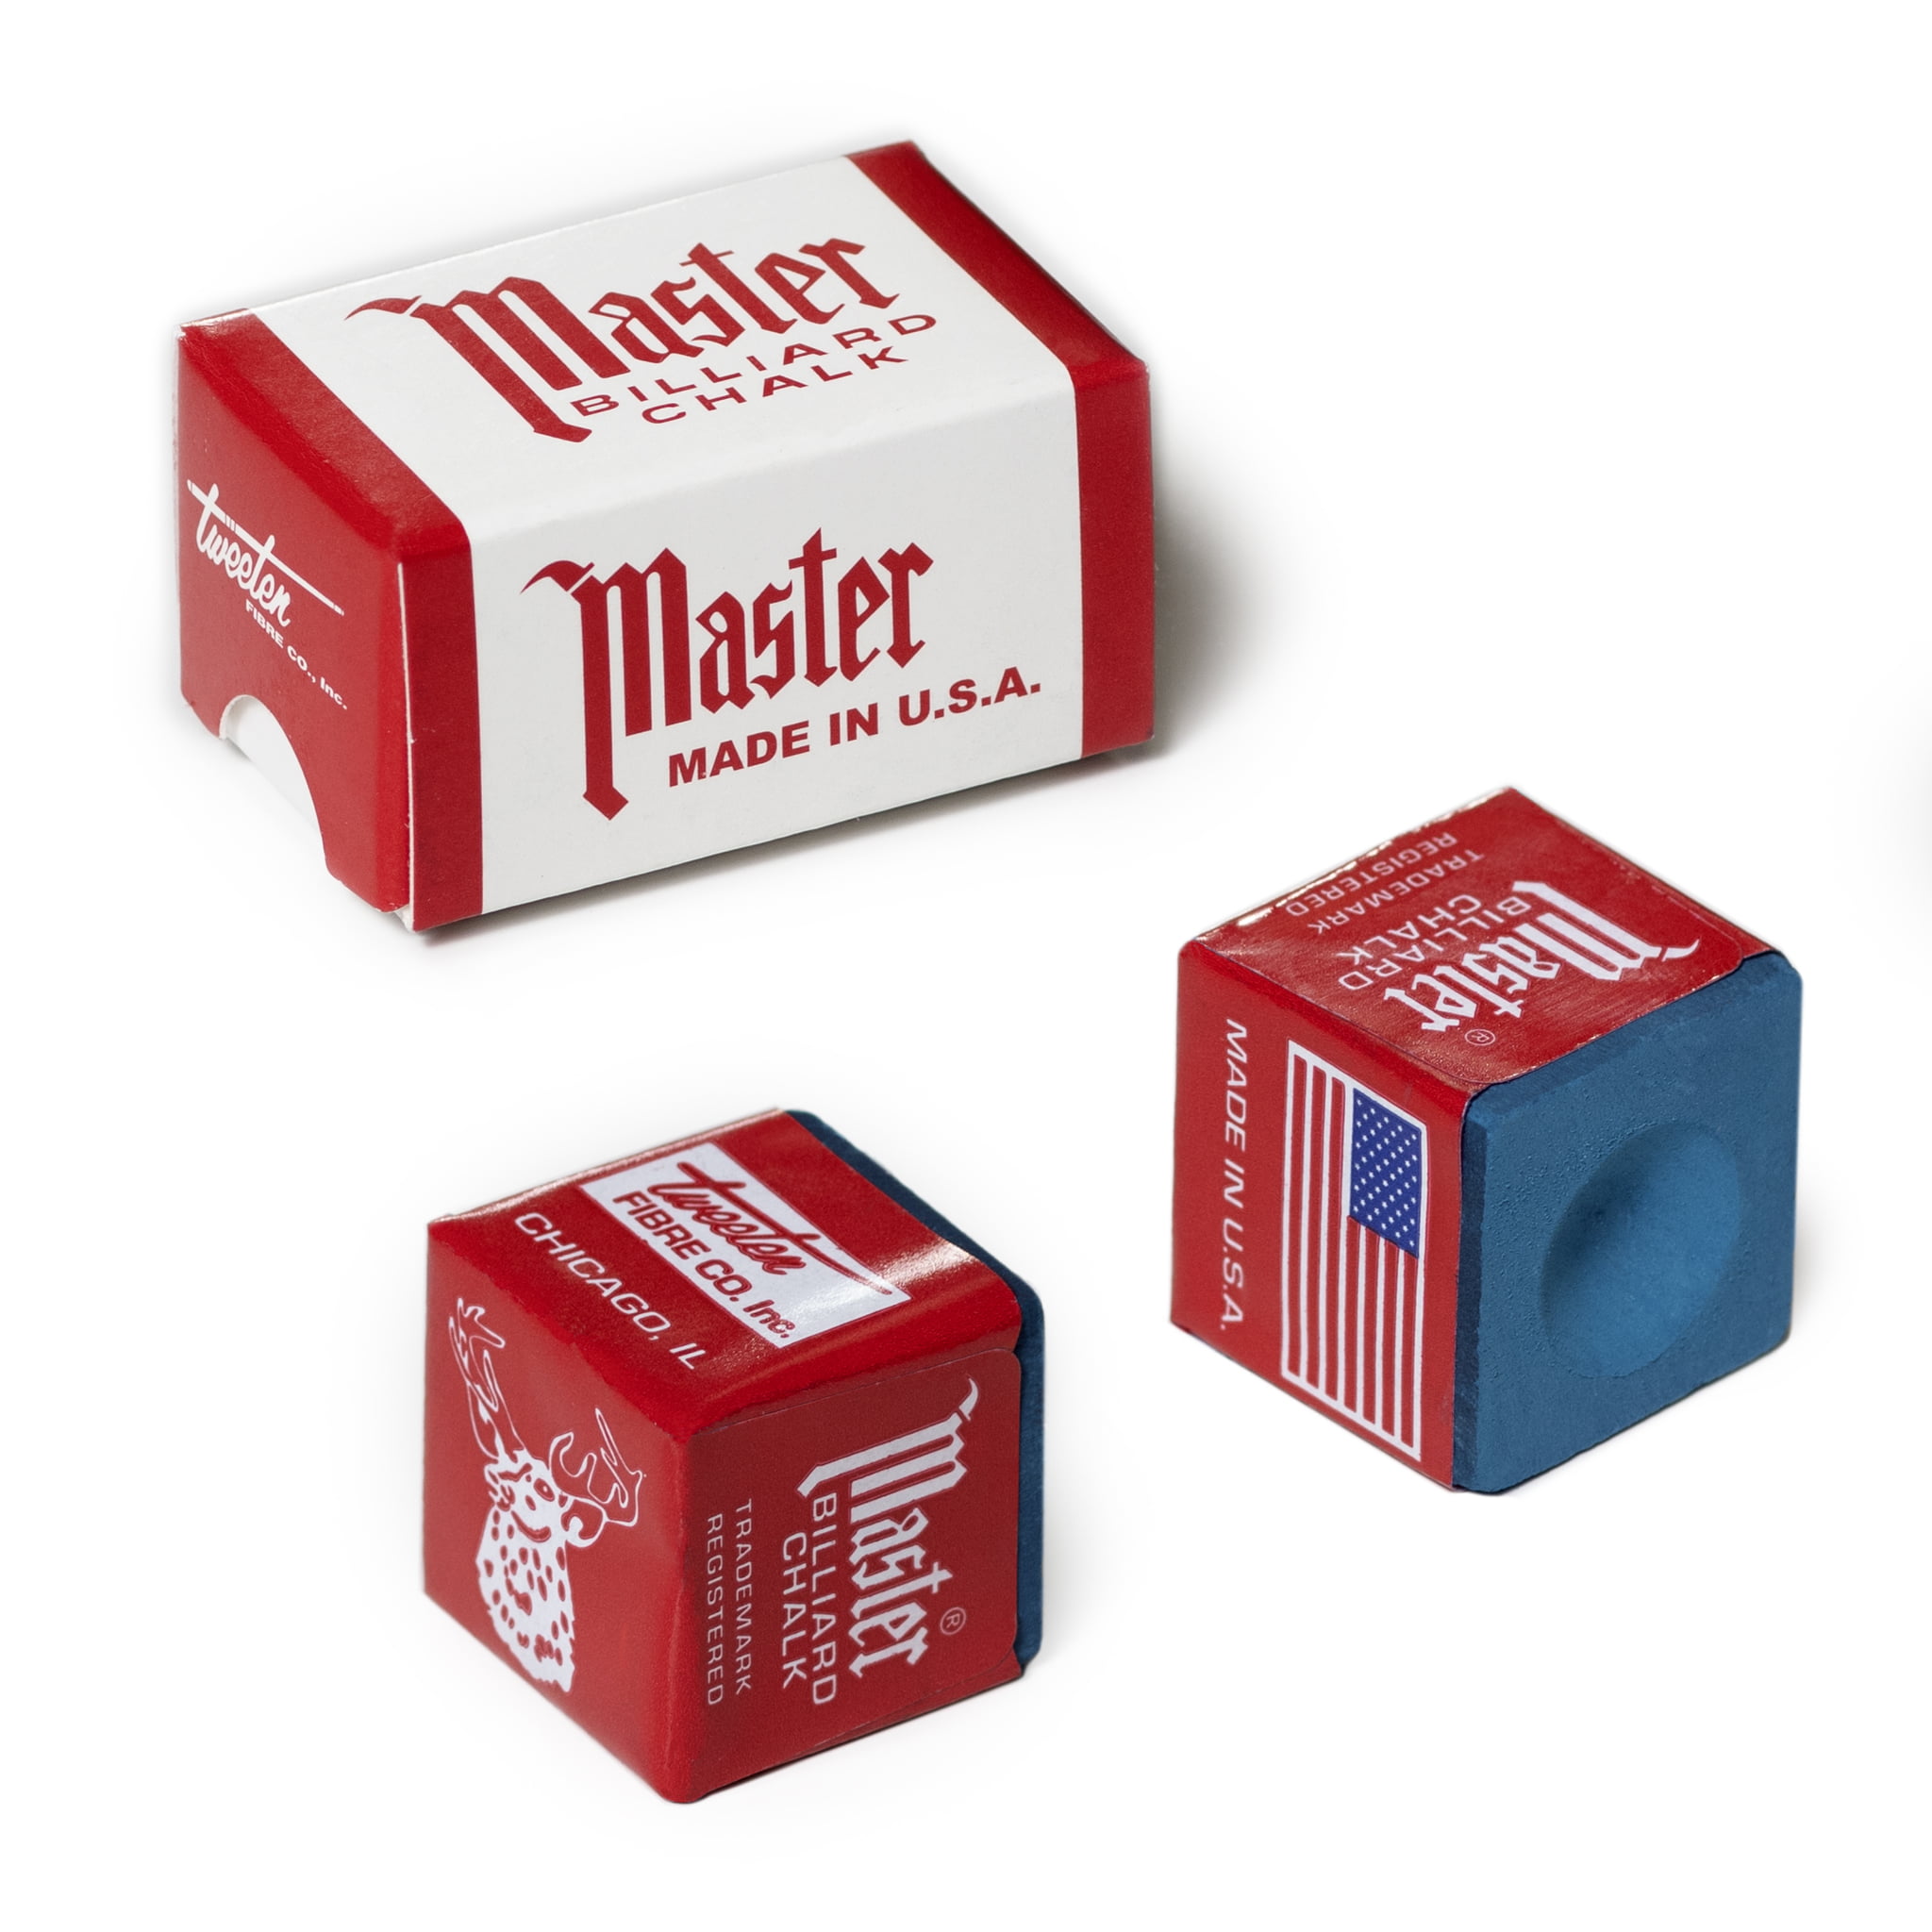 Master Billiard Premium Pool Cue Chalk - 4 pcs - 2 boxes - Made in